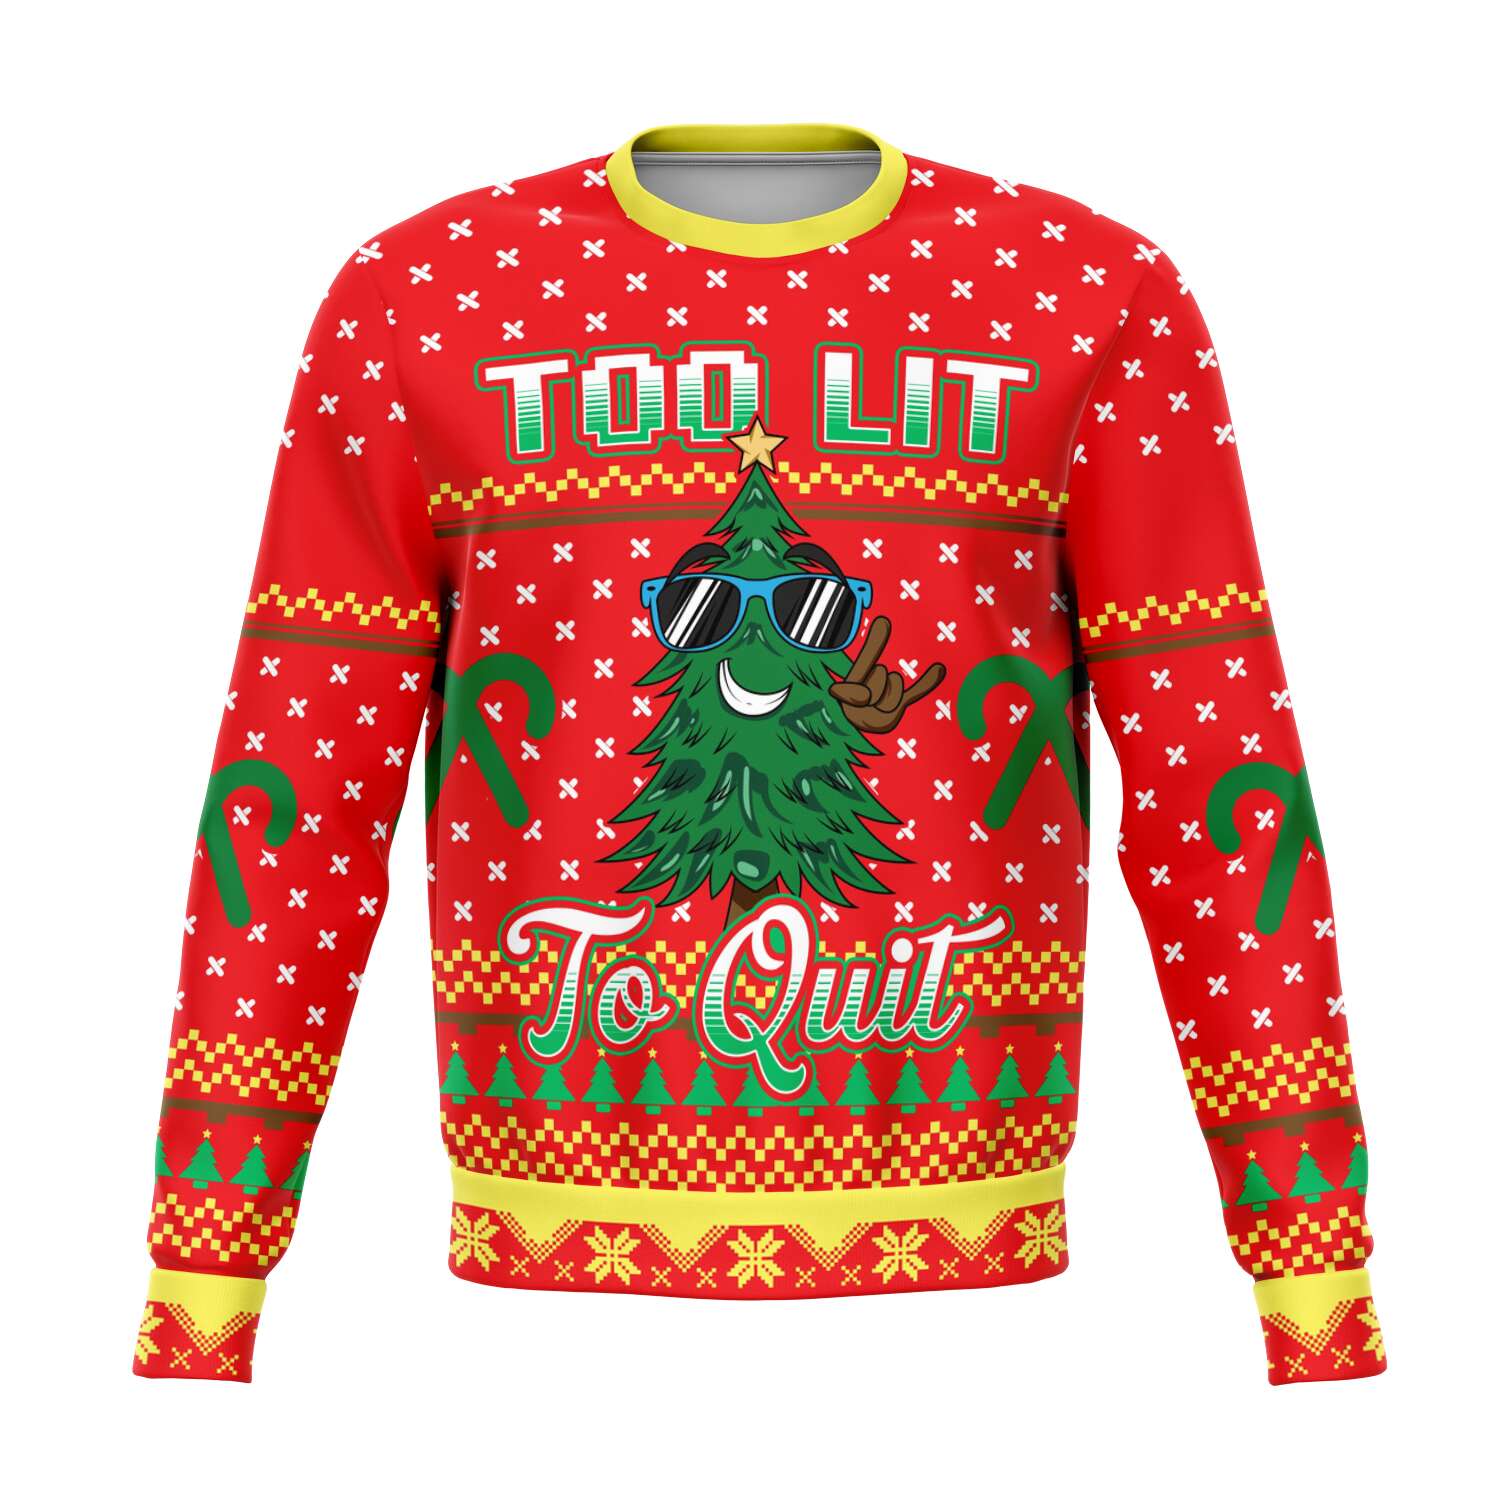 Too Lit To Quit Sweatshirt | Unisex Ugly Christmas Sweater, Xmas Sweater, Holiday Sweater, Festive Sweater, Funny Sweater, Funny Party Shirt